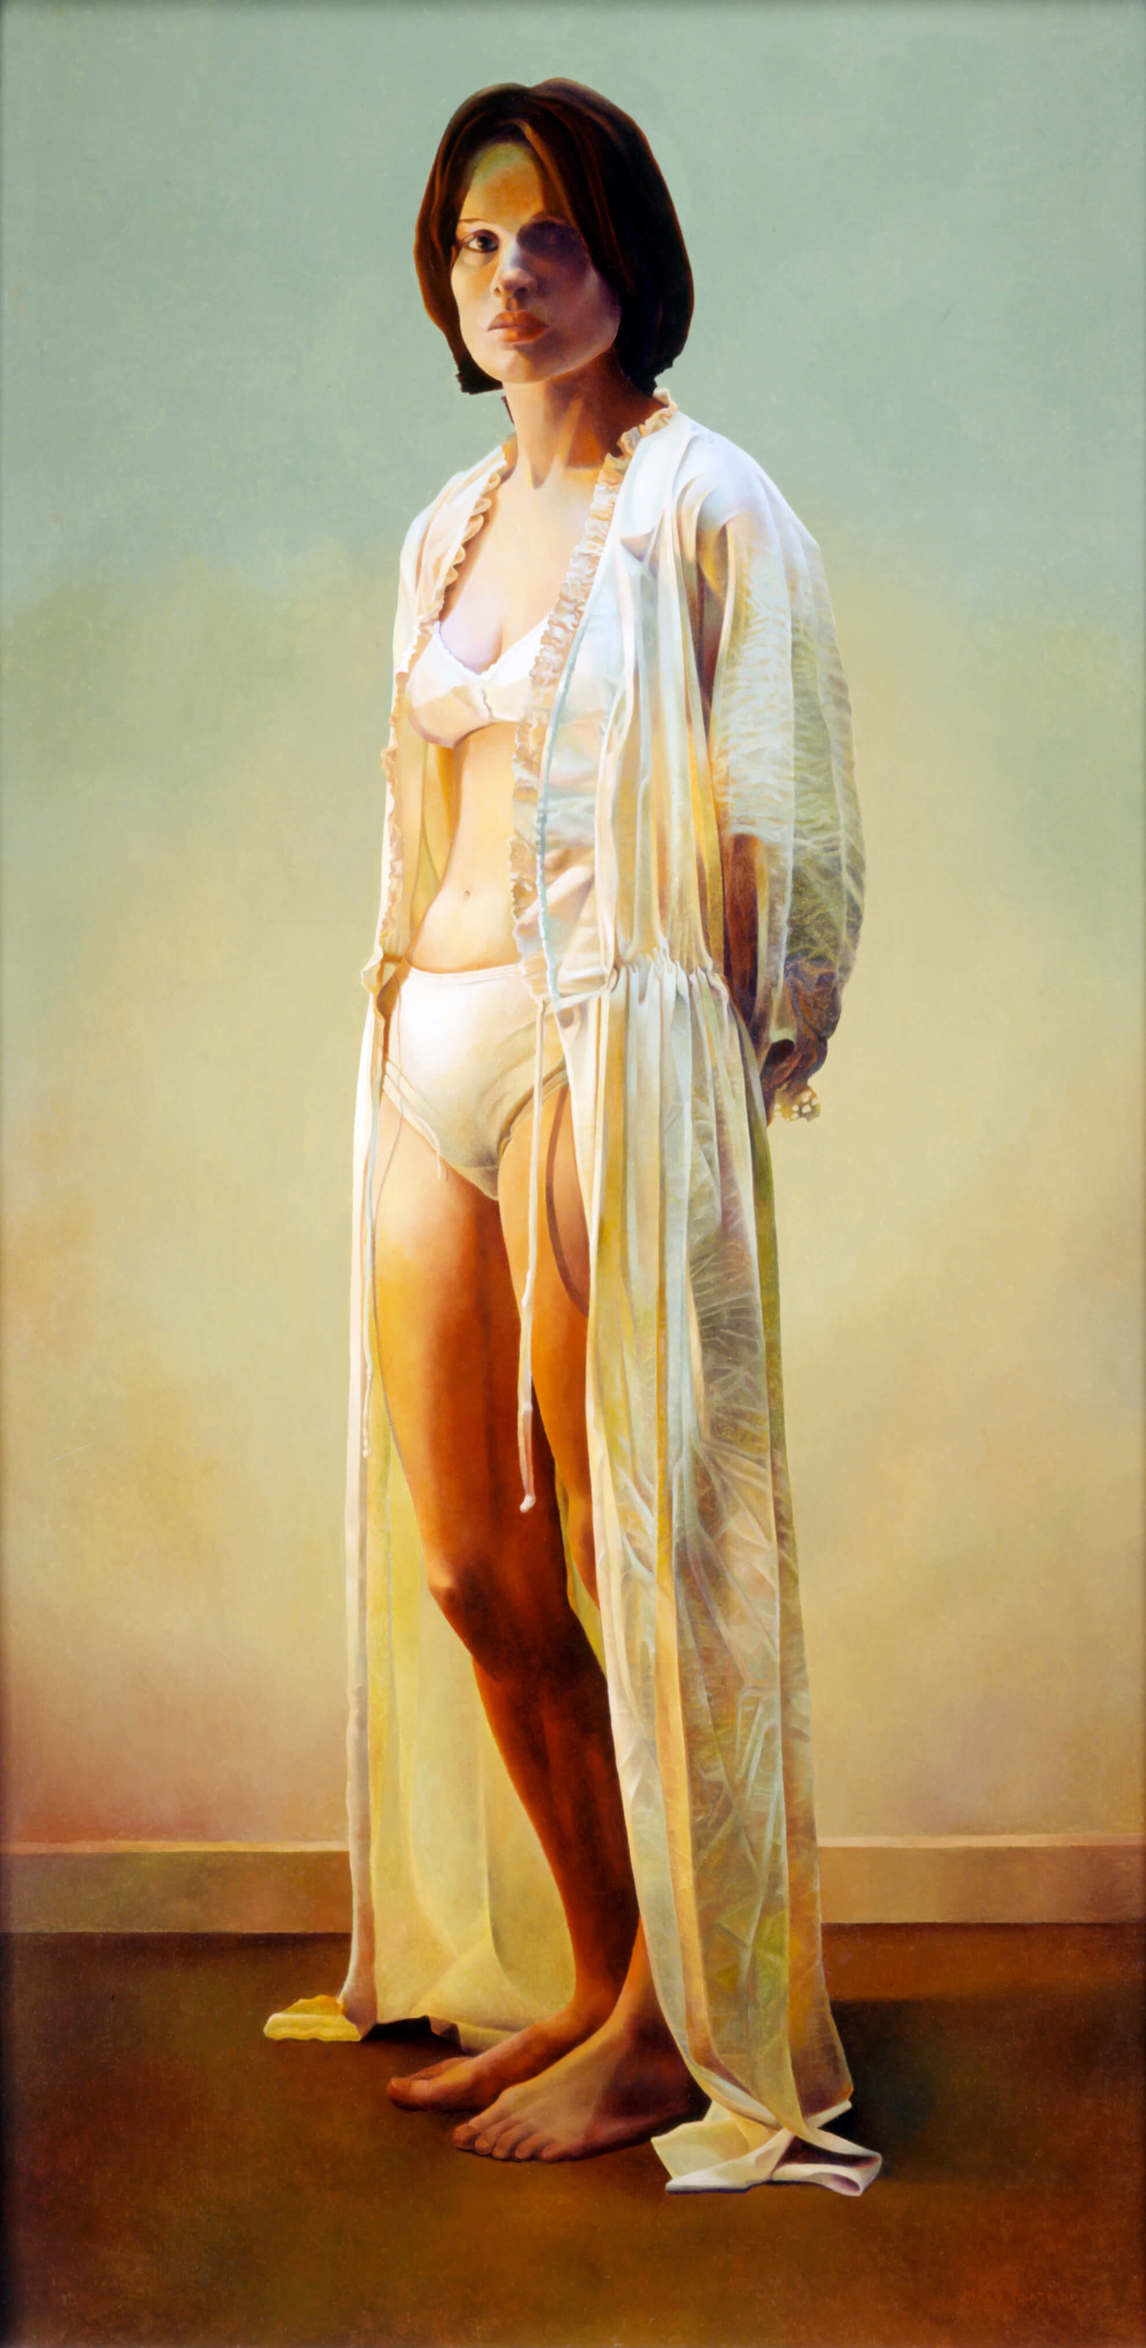 Mary Pratt, Girl in My Dressing Gown, 1981